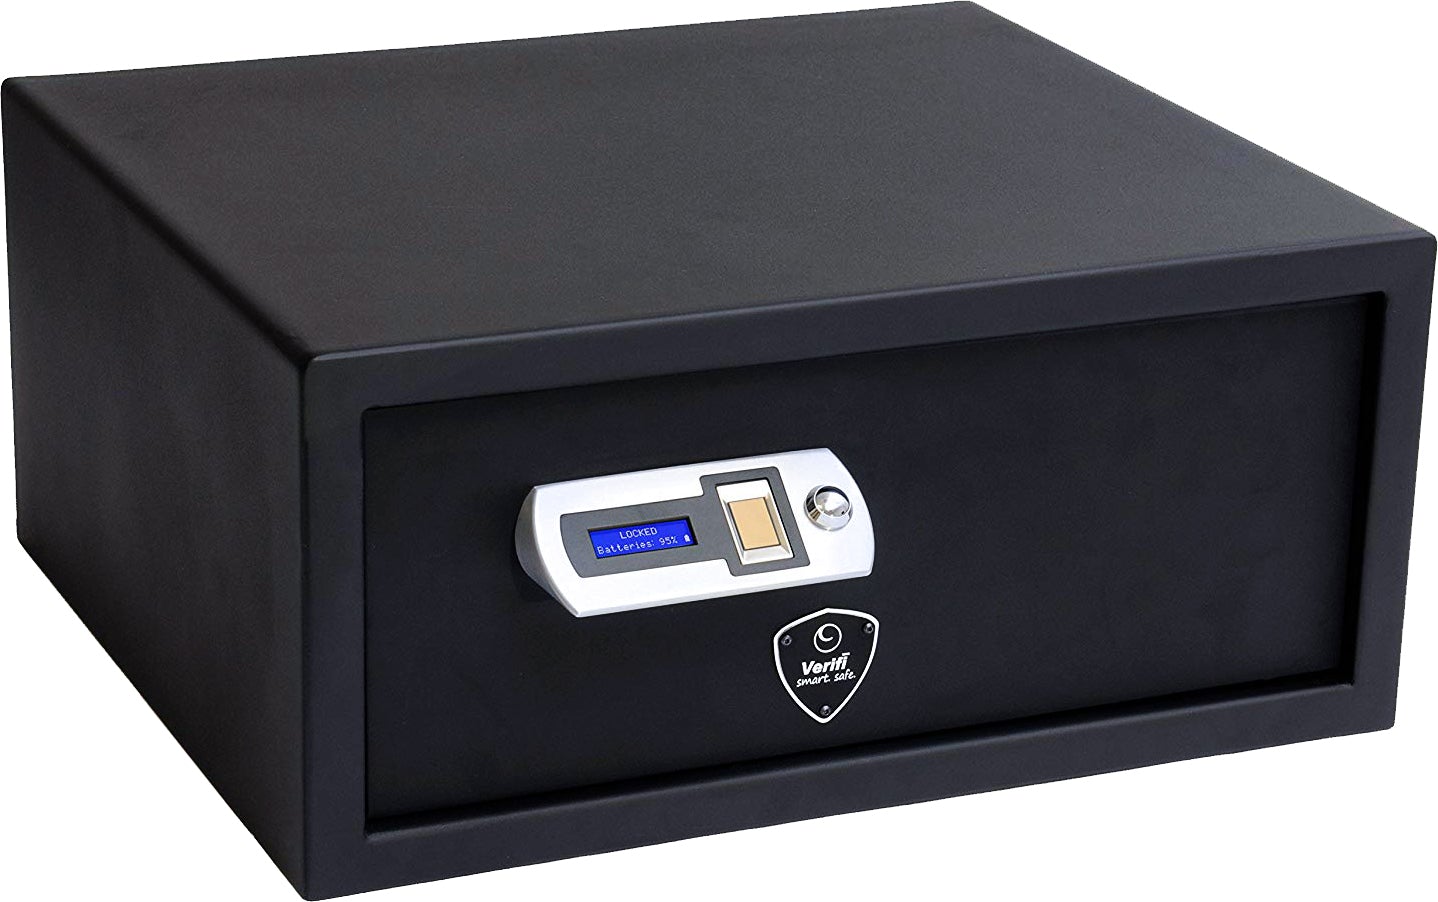 Verifi Smart Safe S6000 Quick Access Biometric Handgun Safe (0.85 cubic feet)